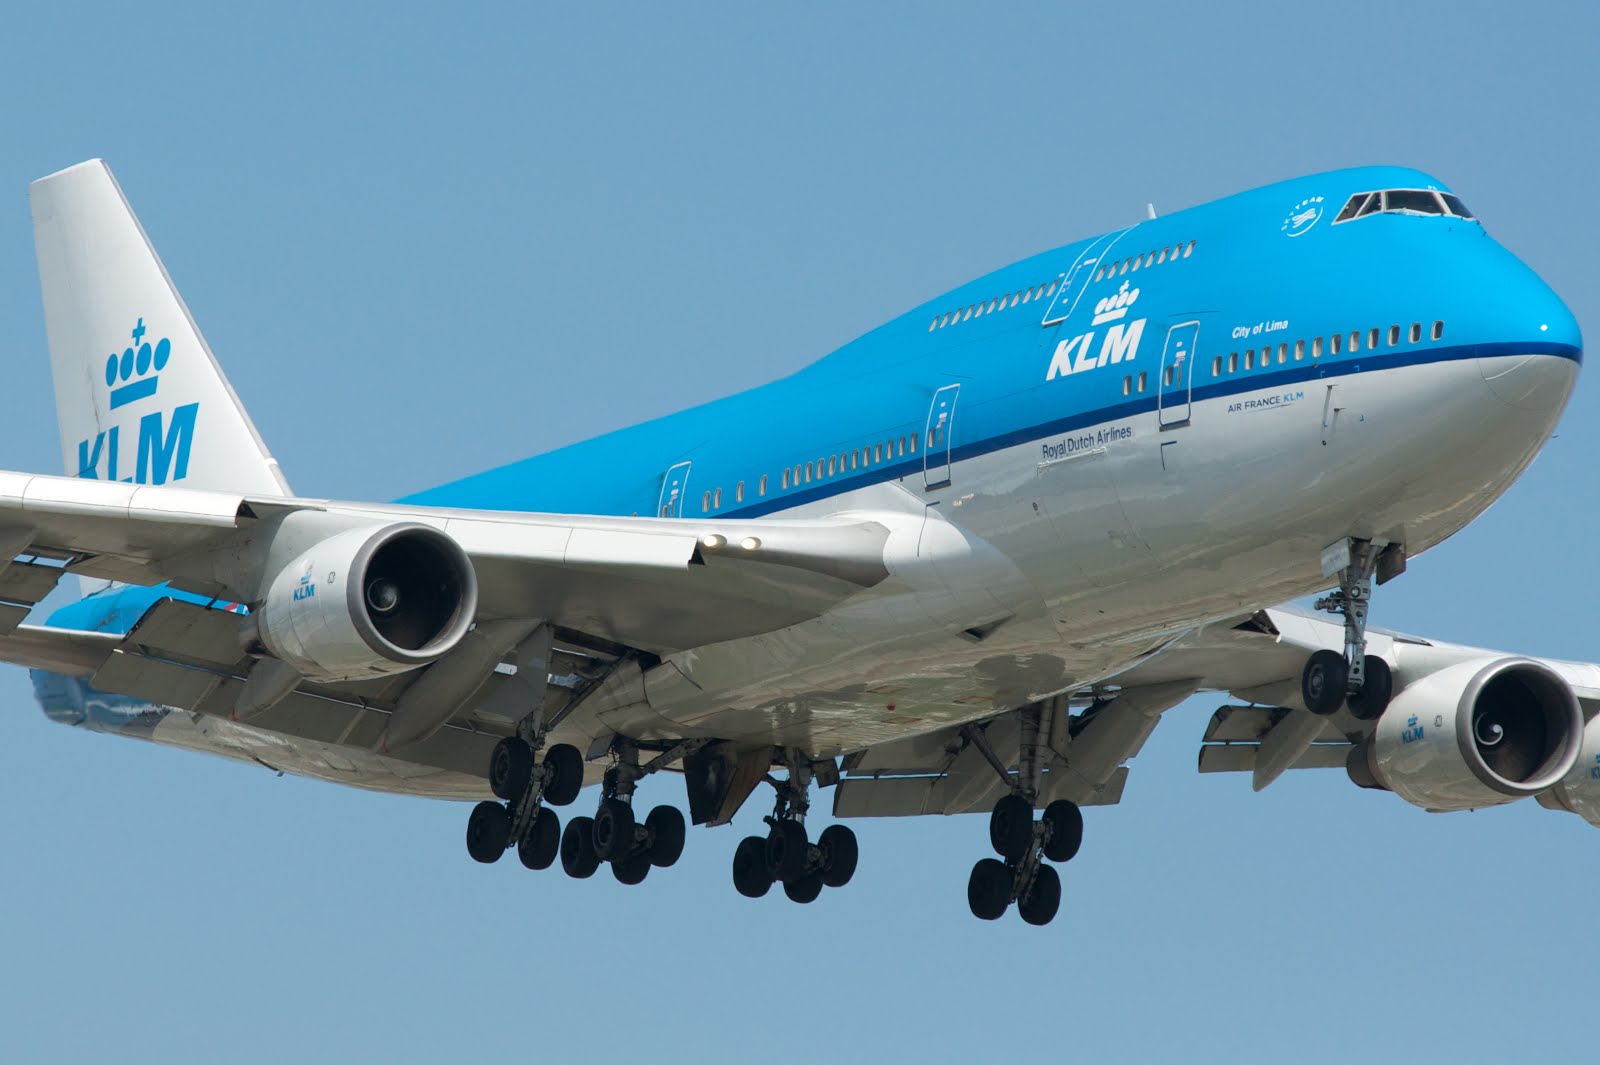 747 KLM